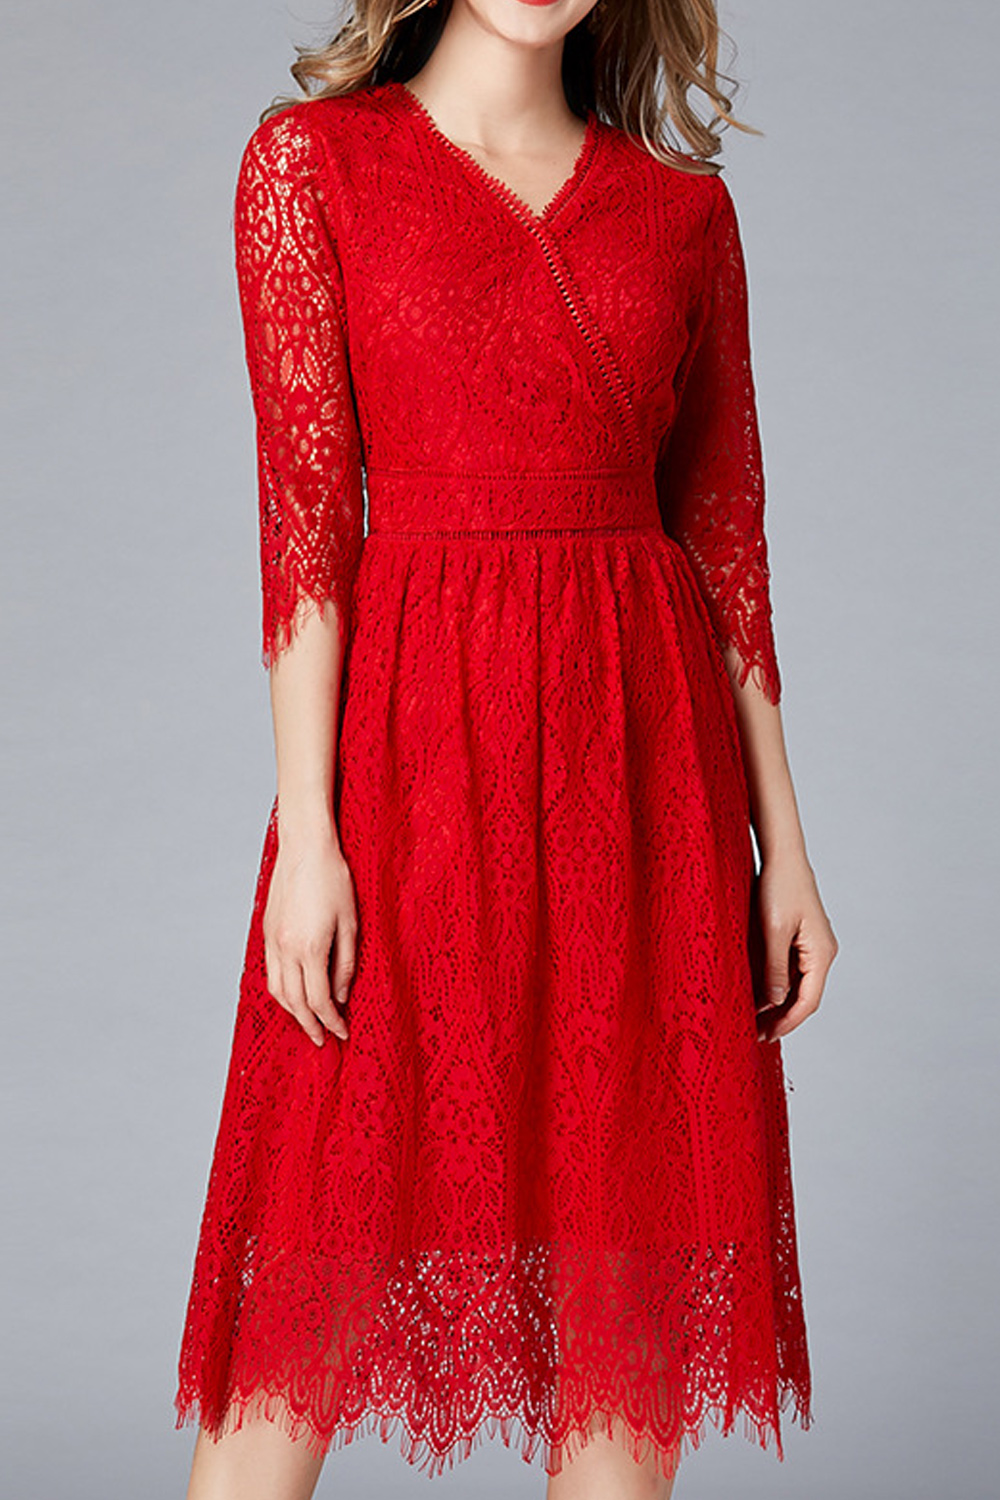 Dresses - Casual, Formal ☀ More | Sears.com